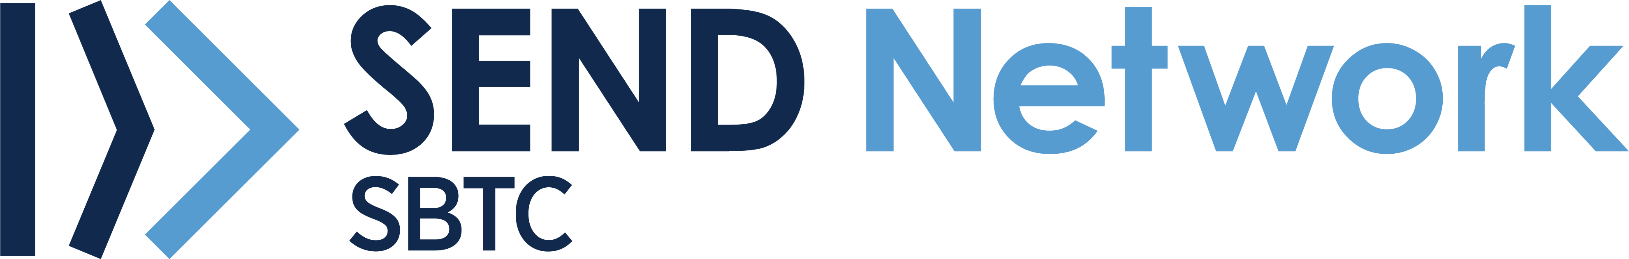 SEND Network Logo[1][2]